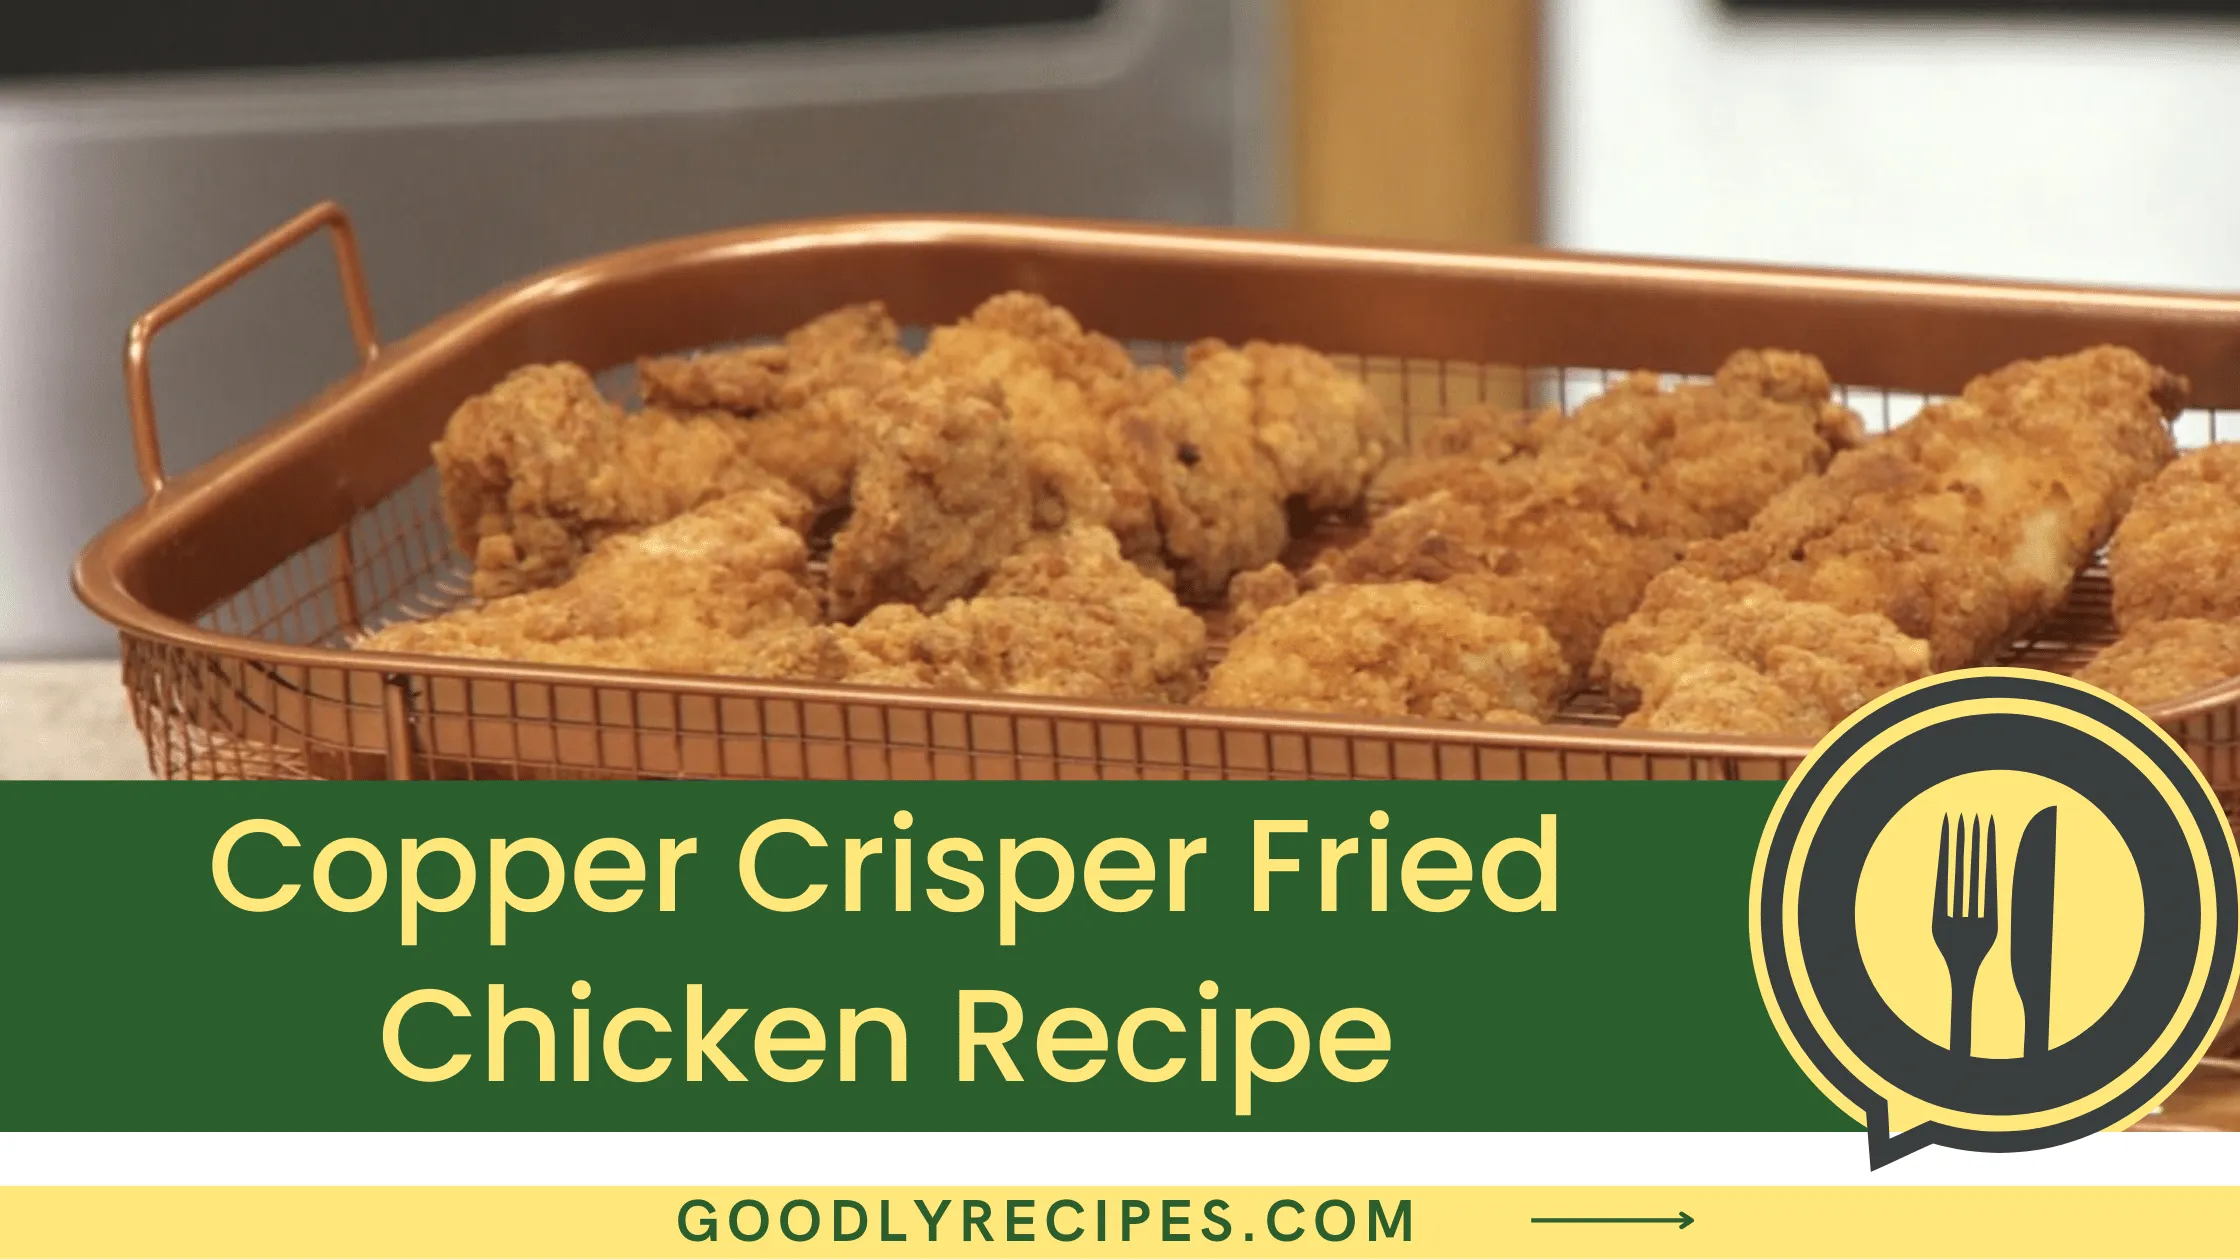 Copper Crisper Fried Chicken Recipe